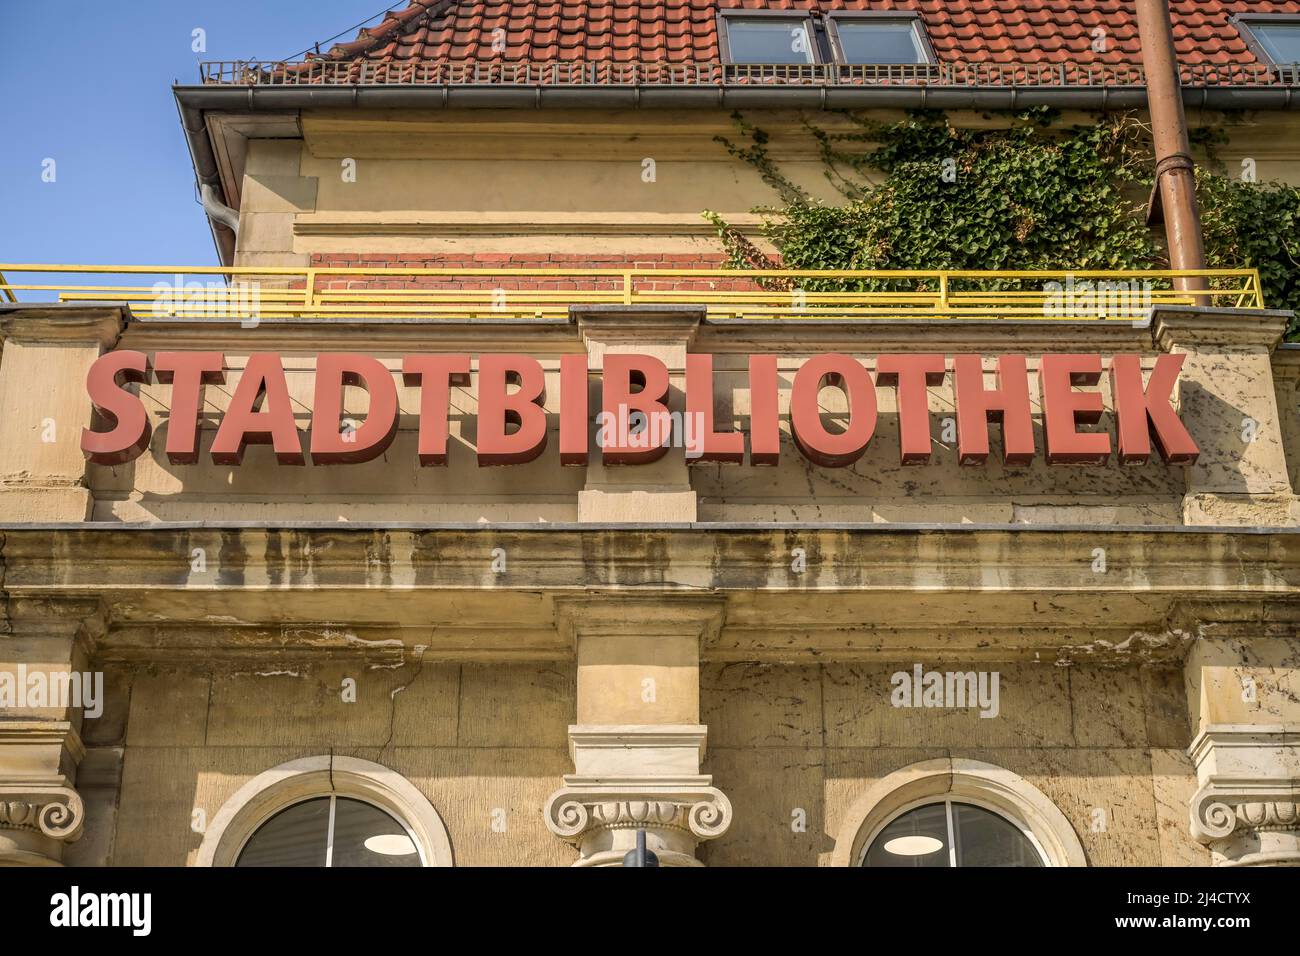 Stadtbibliothek, Carl-Schurz-straße, Altstadt, Spandau, Berlin, Deutschland Stockfoto